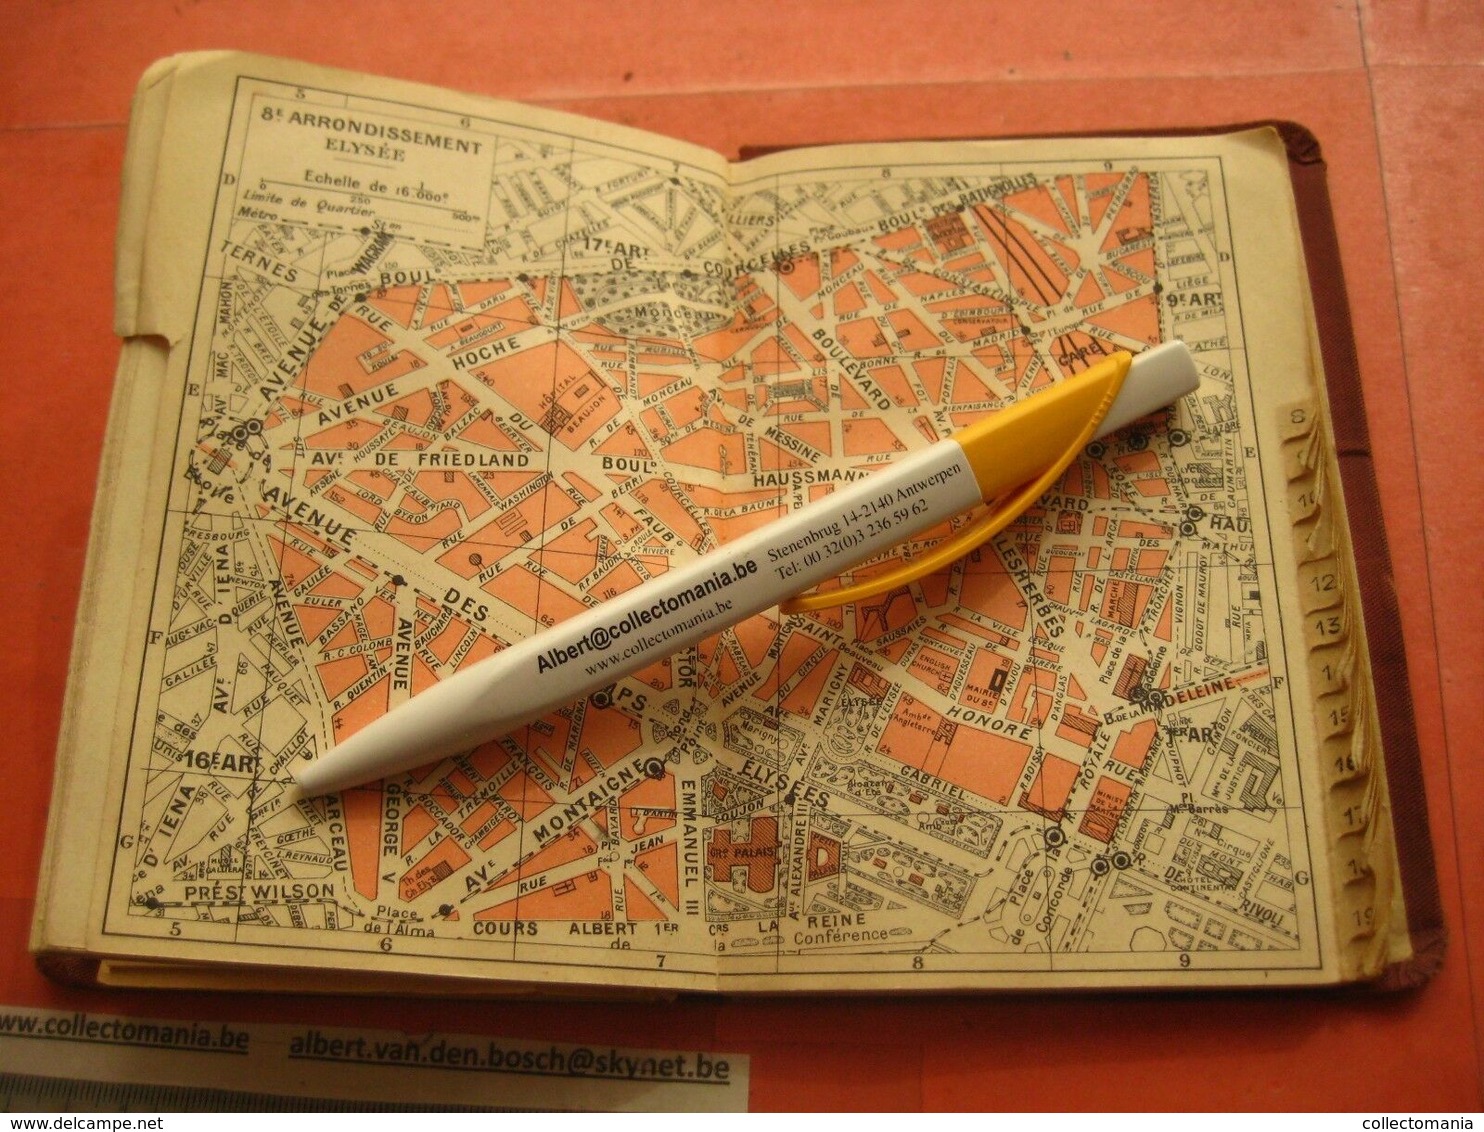 1 booklet 14,5cm X 10cm Guilmain printer, Paris METRO c1900 arrondissement - nomenclature des rues + plans